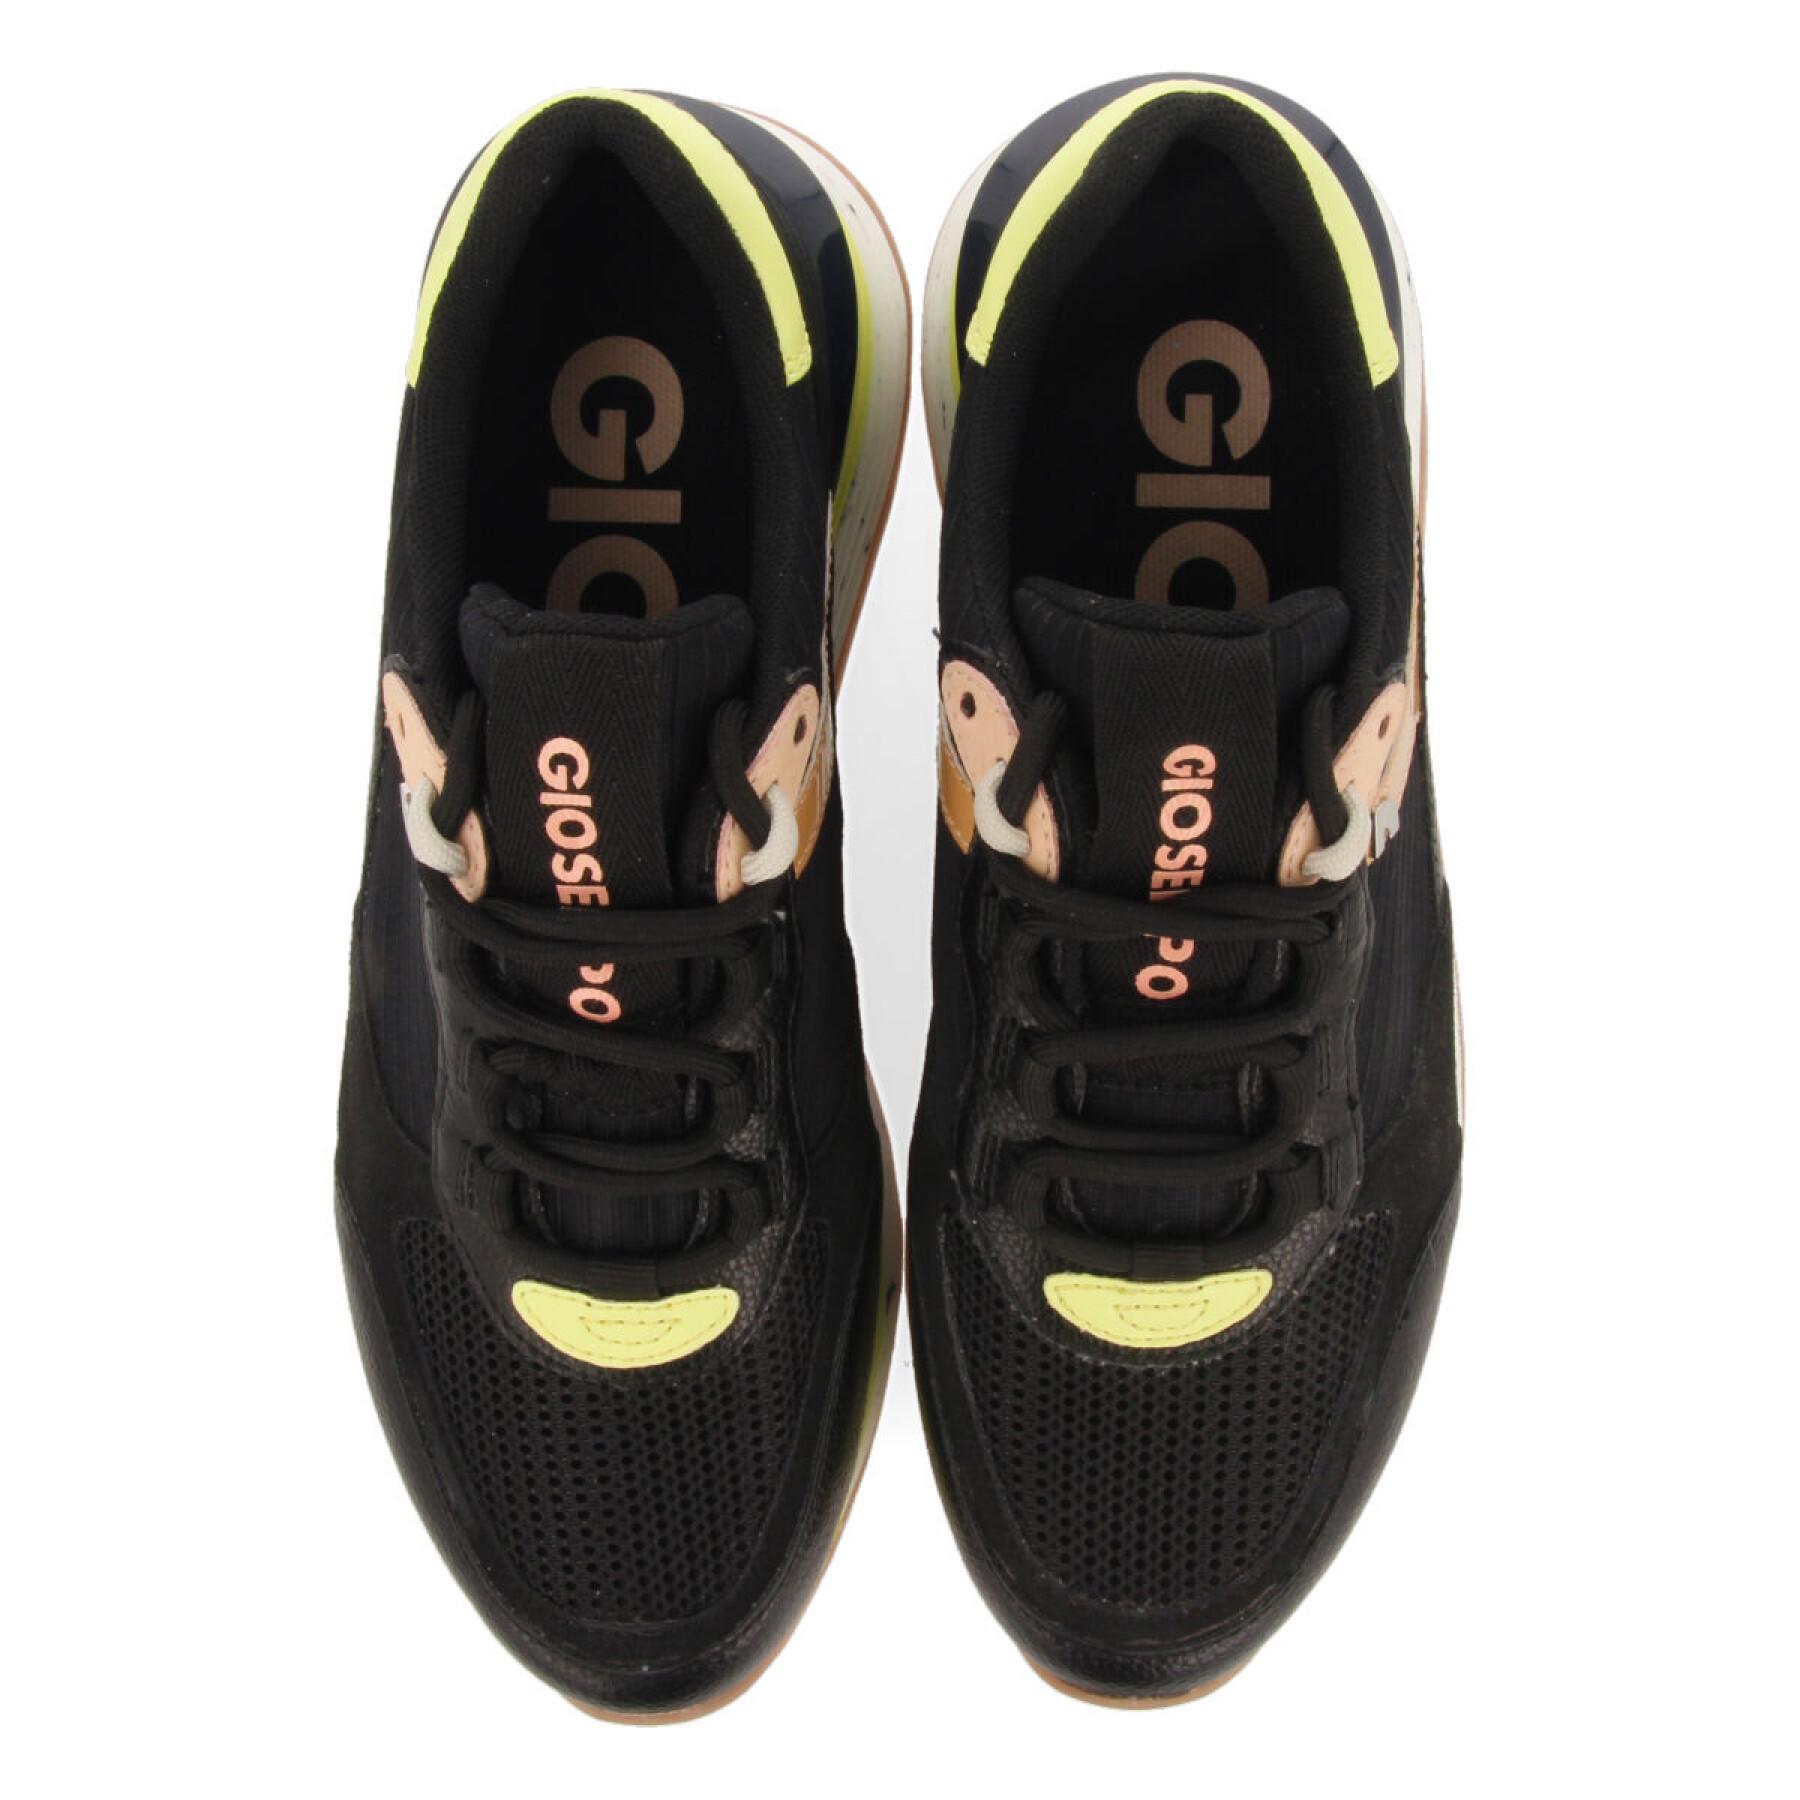 Sneakers für Frauen Gioseppo Fehring